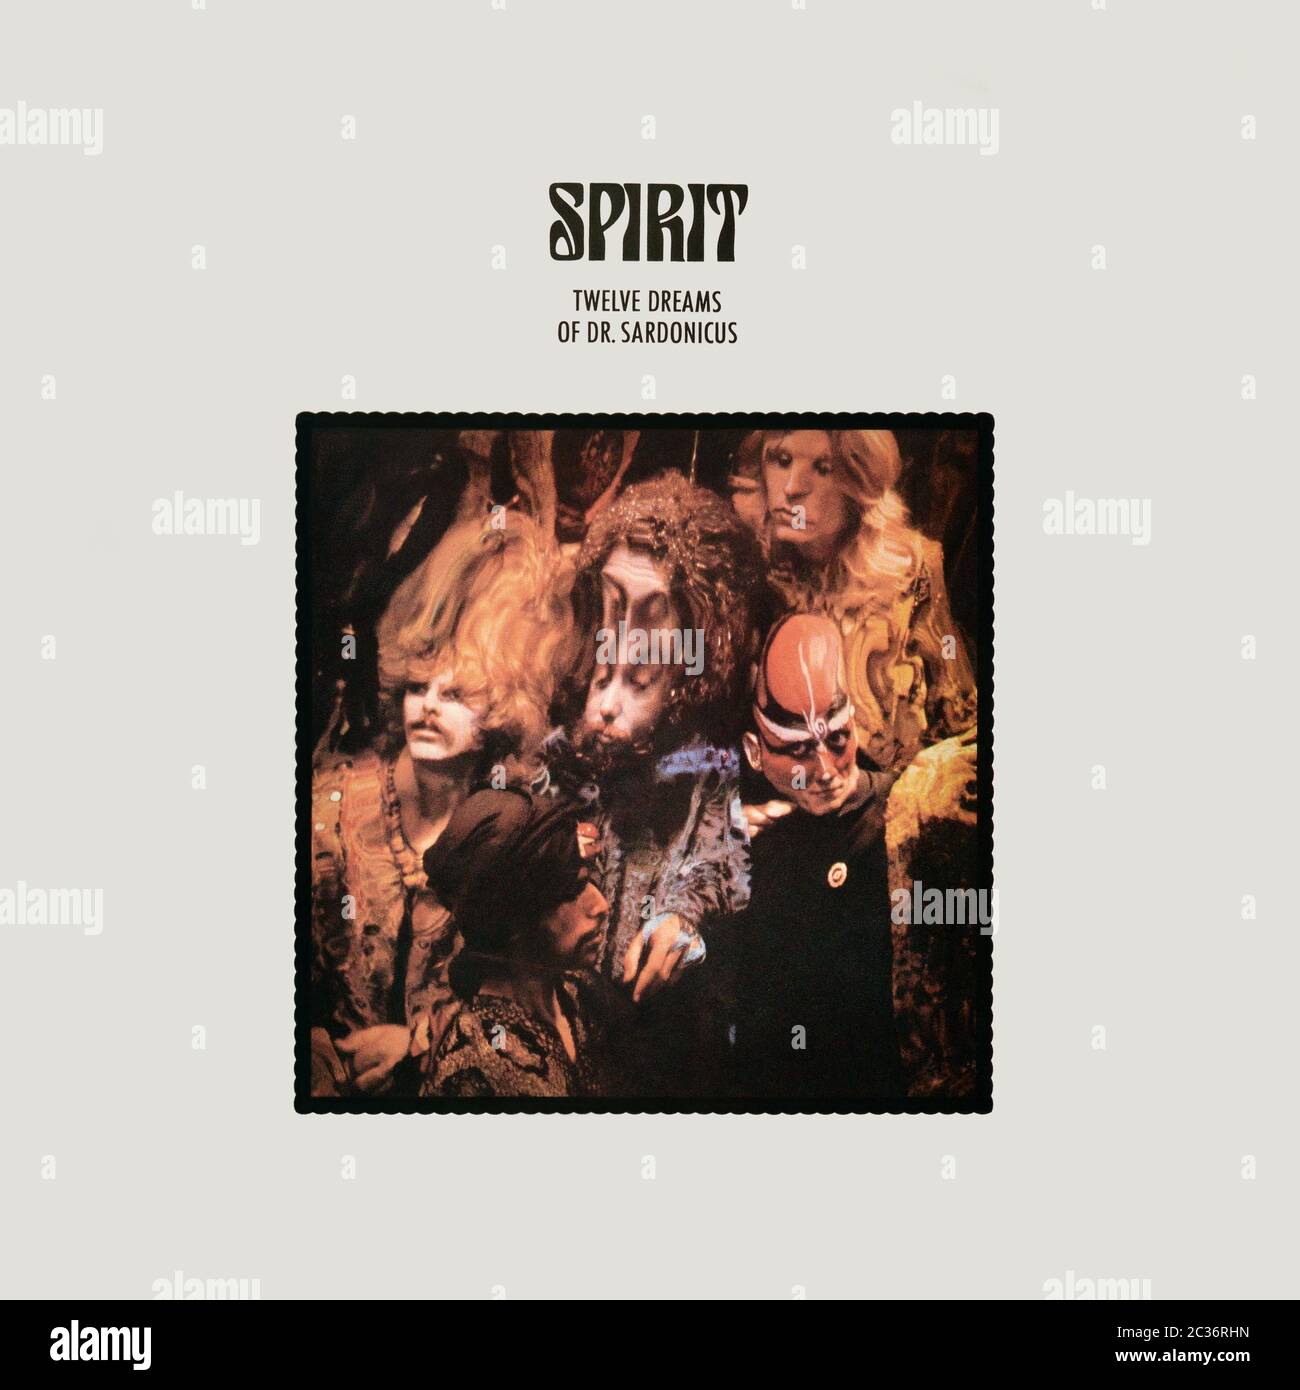 Spirit - original Vinyl Album Cover - Twelve Dreams of Dr. Sardonicus - 1970 Stockfoto